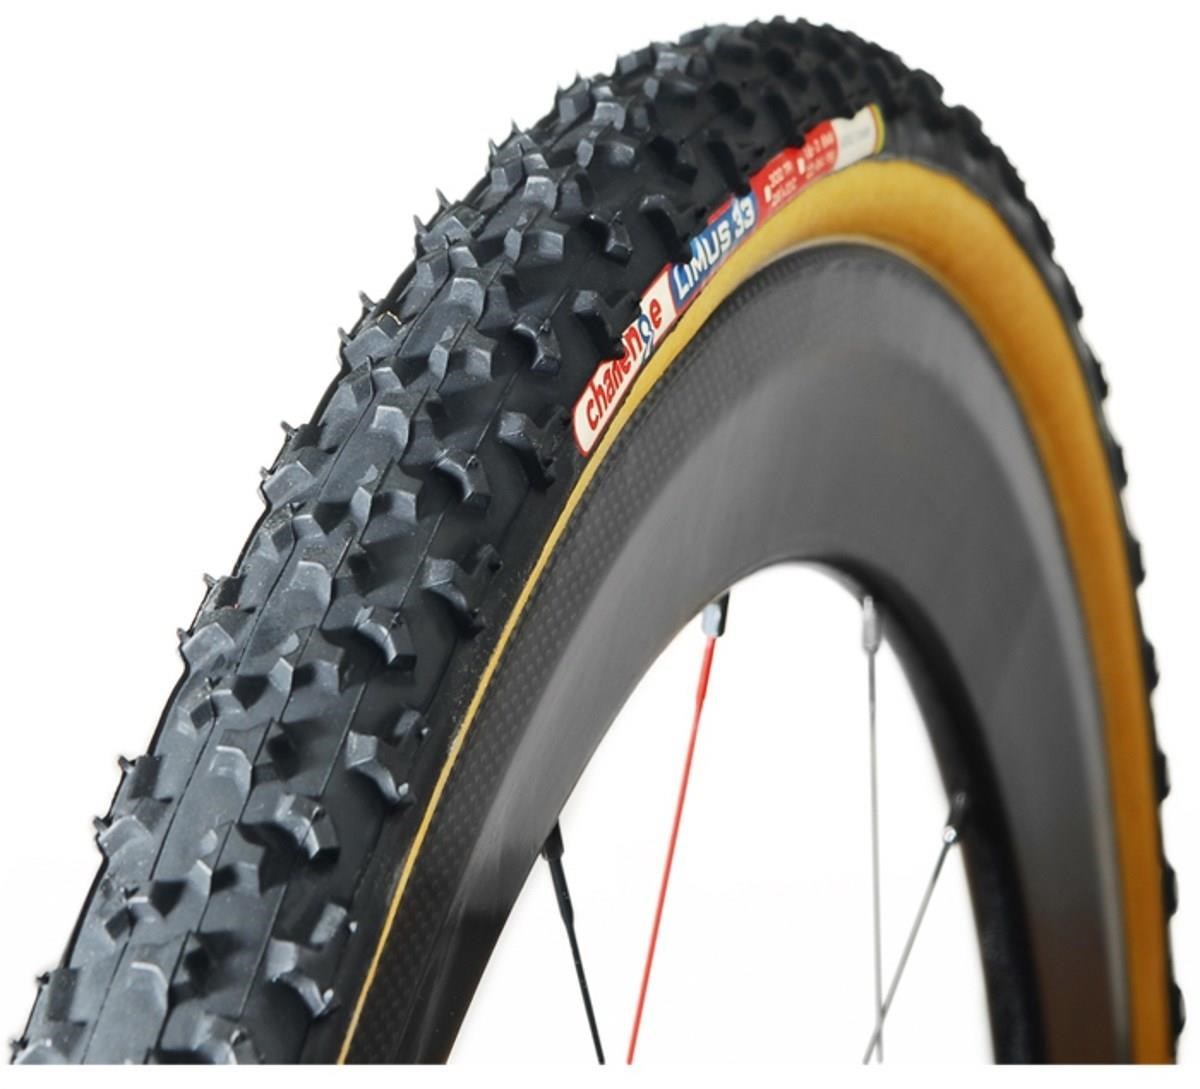 Challenge Limus 33 Tubular Cyclocross Tyre